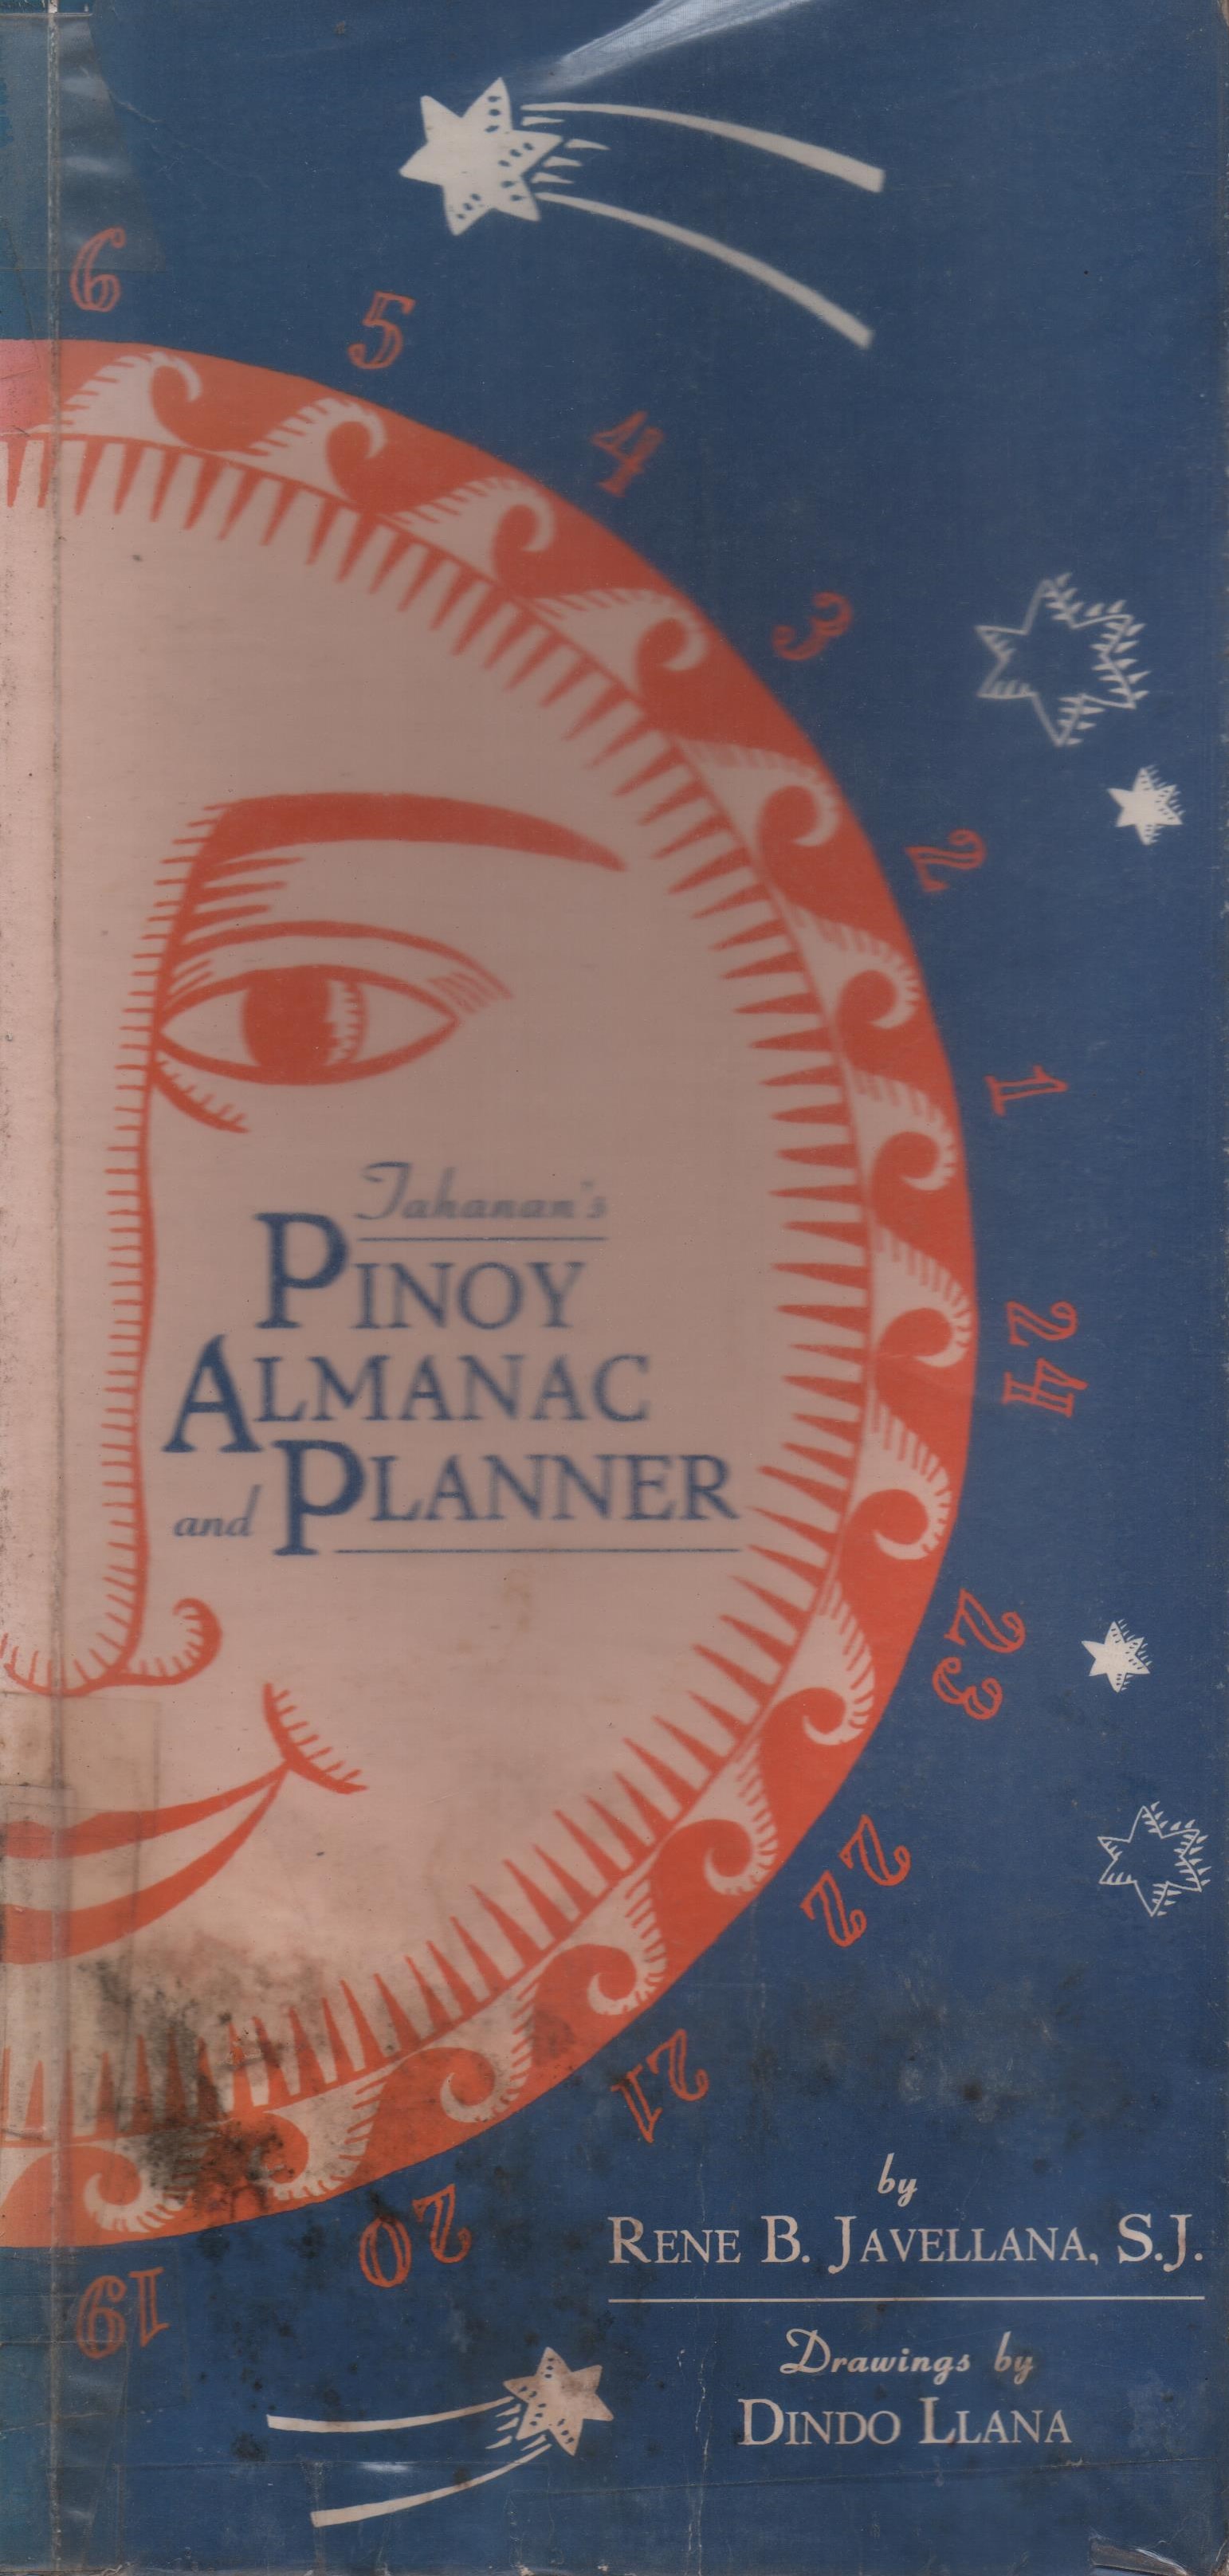 Tahanan's Pinoy almanac and planner